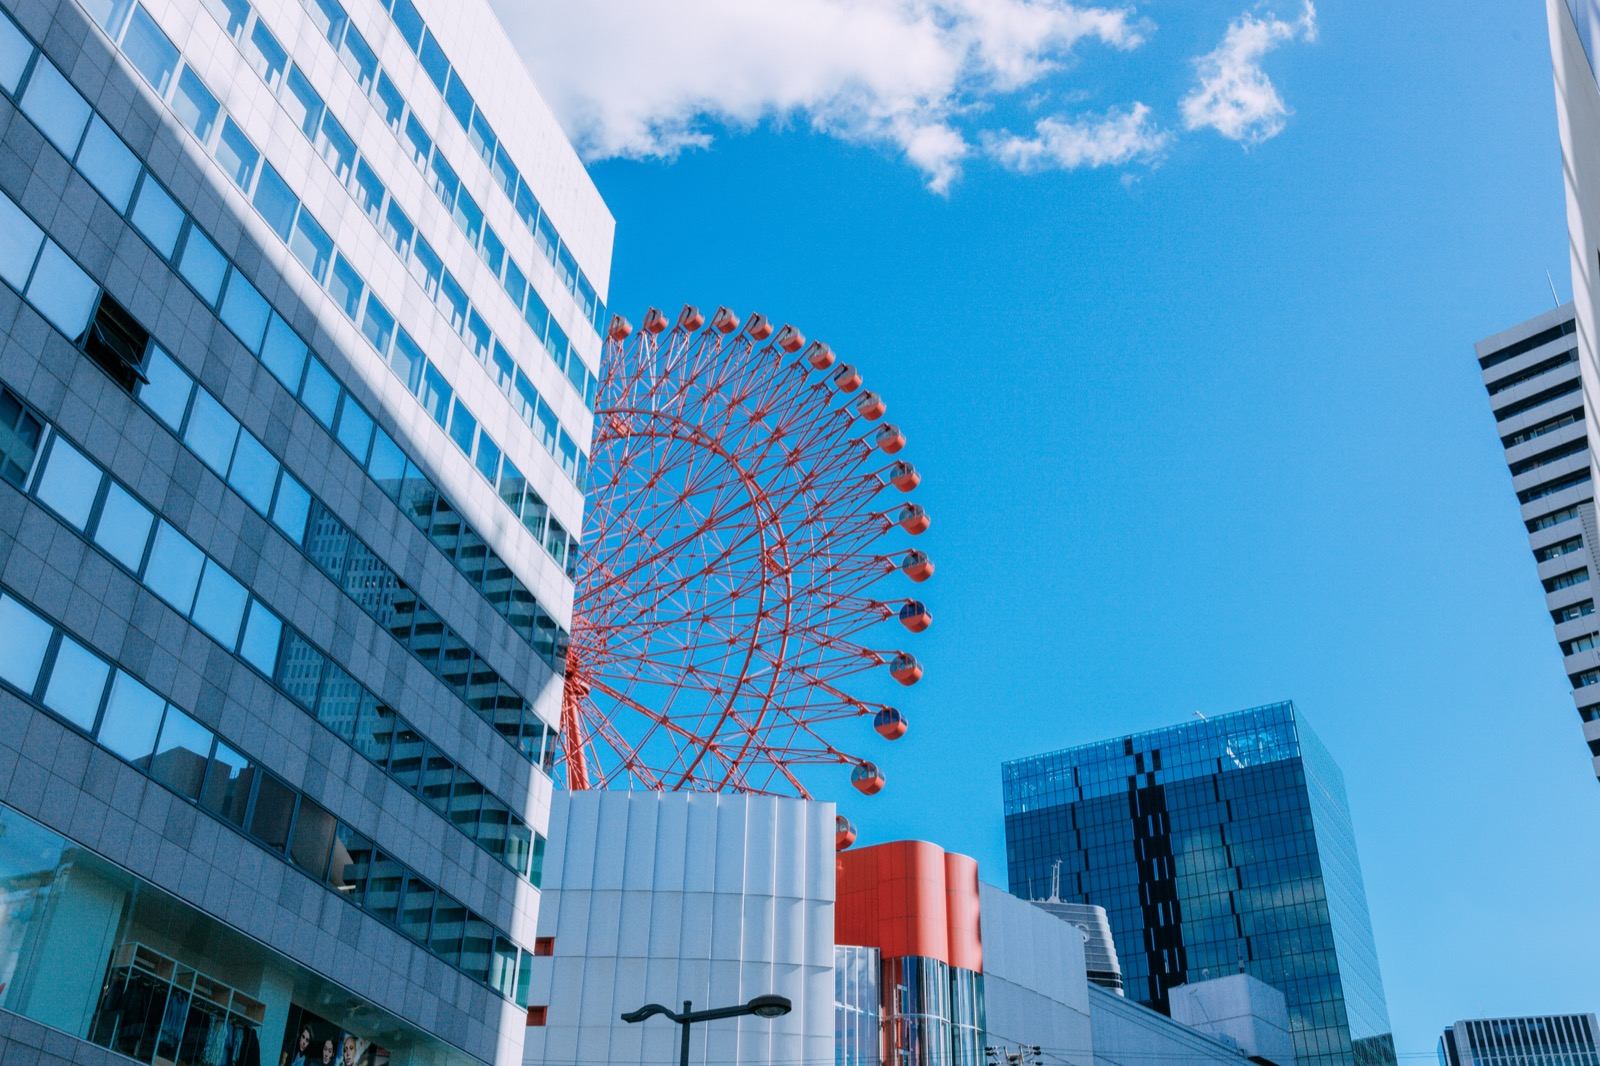 Photo of HEP FIVE Ferris Wheel, Japan (Osaka_2 by hans-johnson)